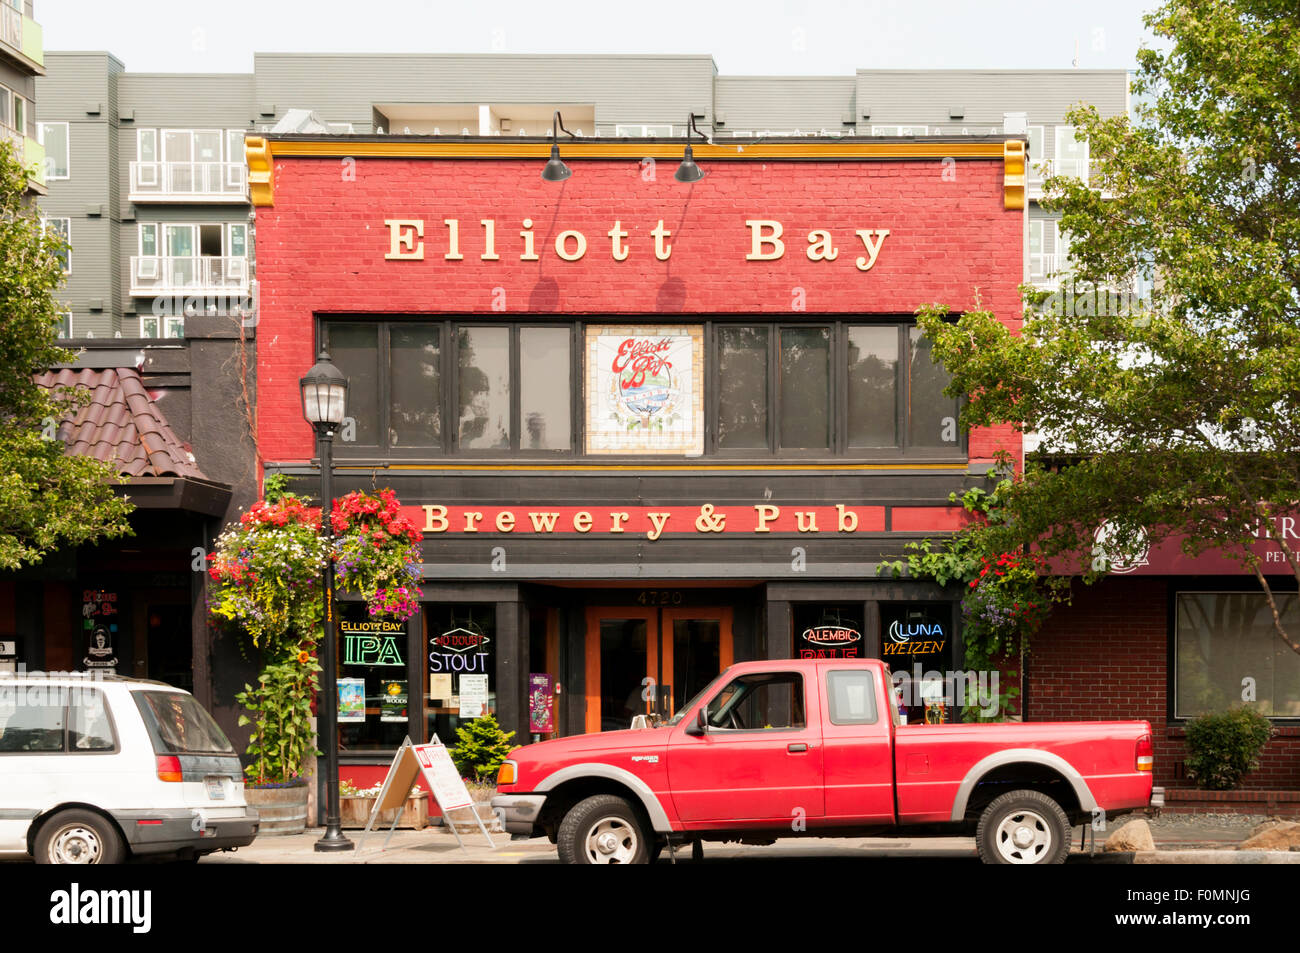 The Elliott Bay Brewery & Pub in West Seattle. Stock Photo